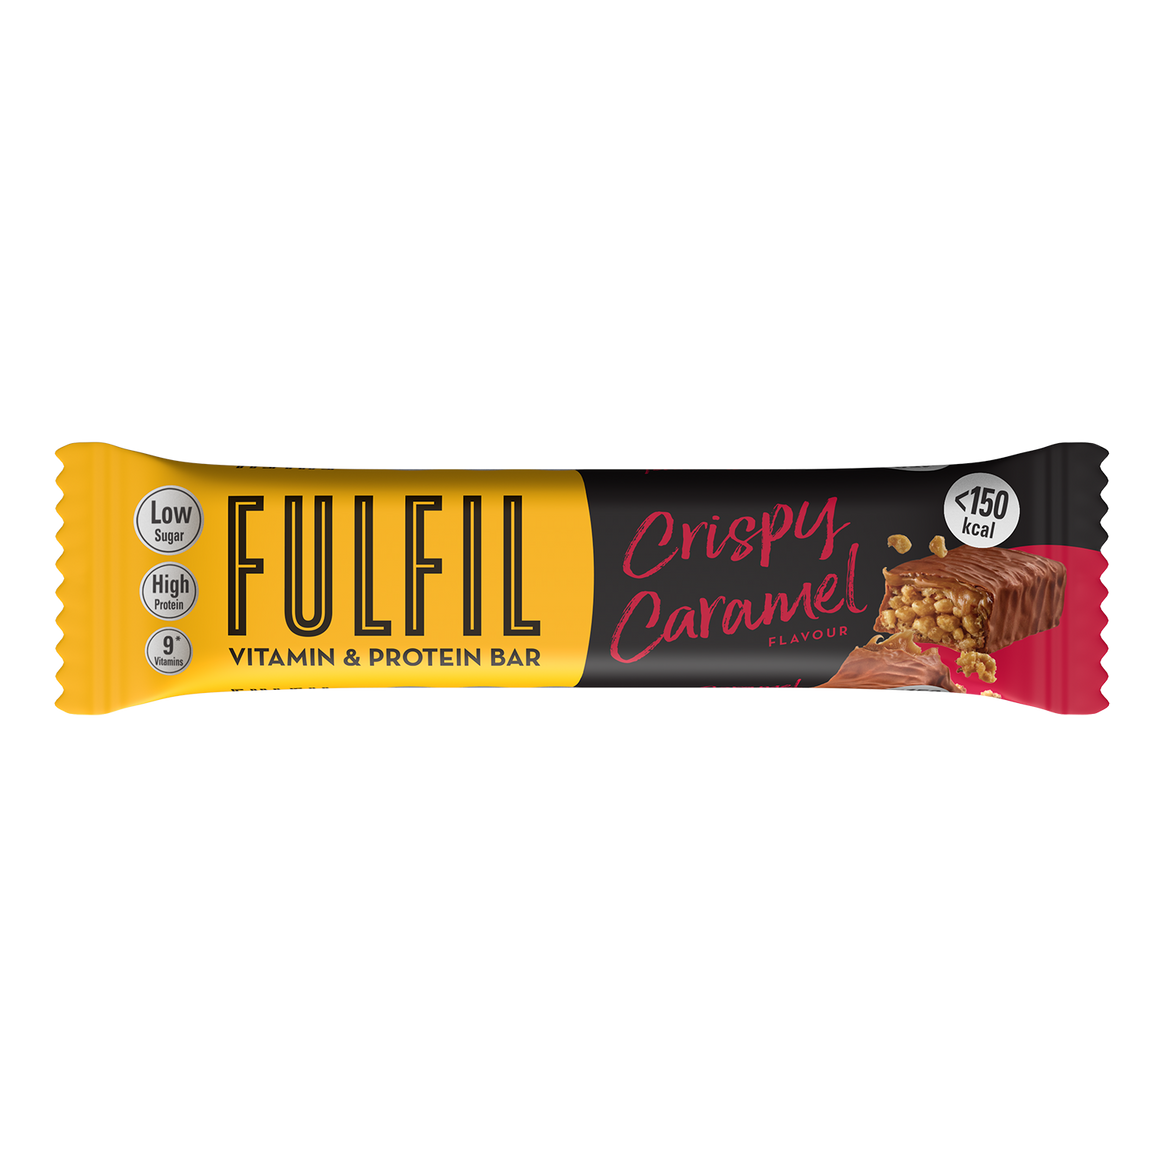 Fulfil Crispy Caramel Flavour - Vitamin & Protein Bar, Low Sugar, High Protein, 150 Calories With 9 Vitamins, 37gm